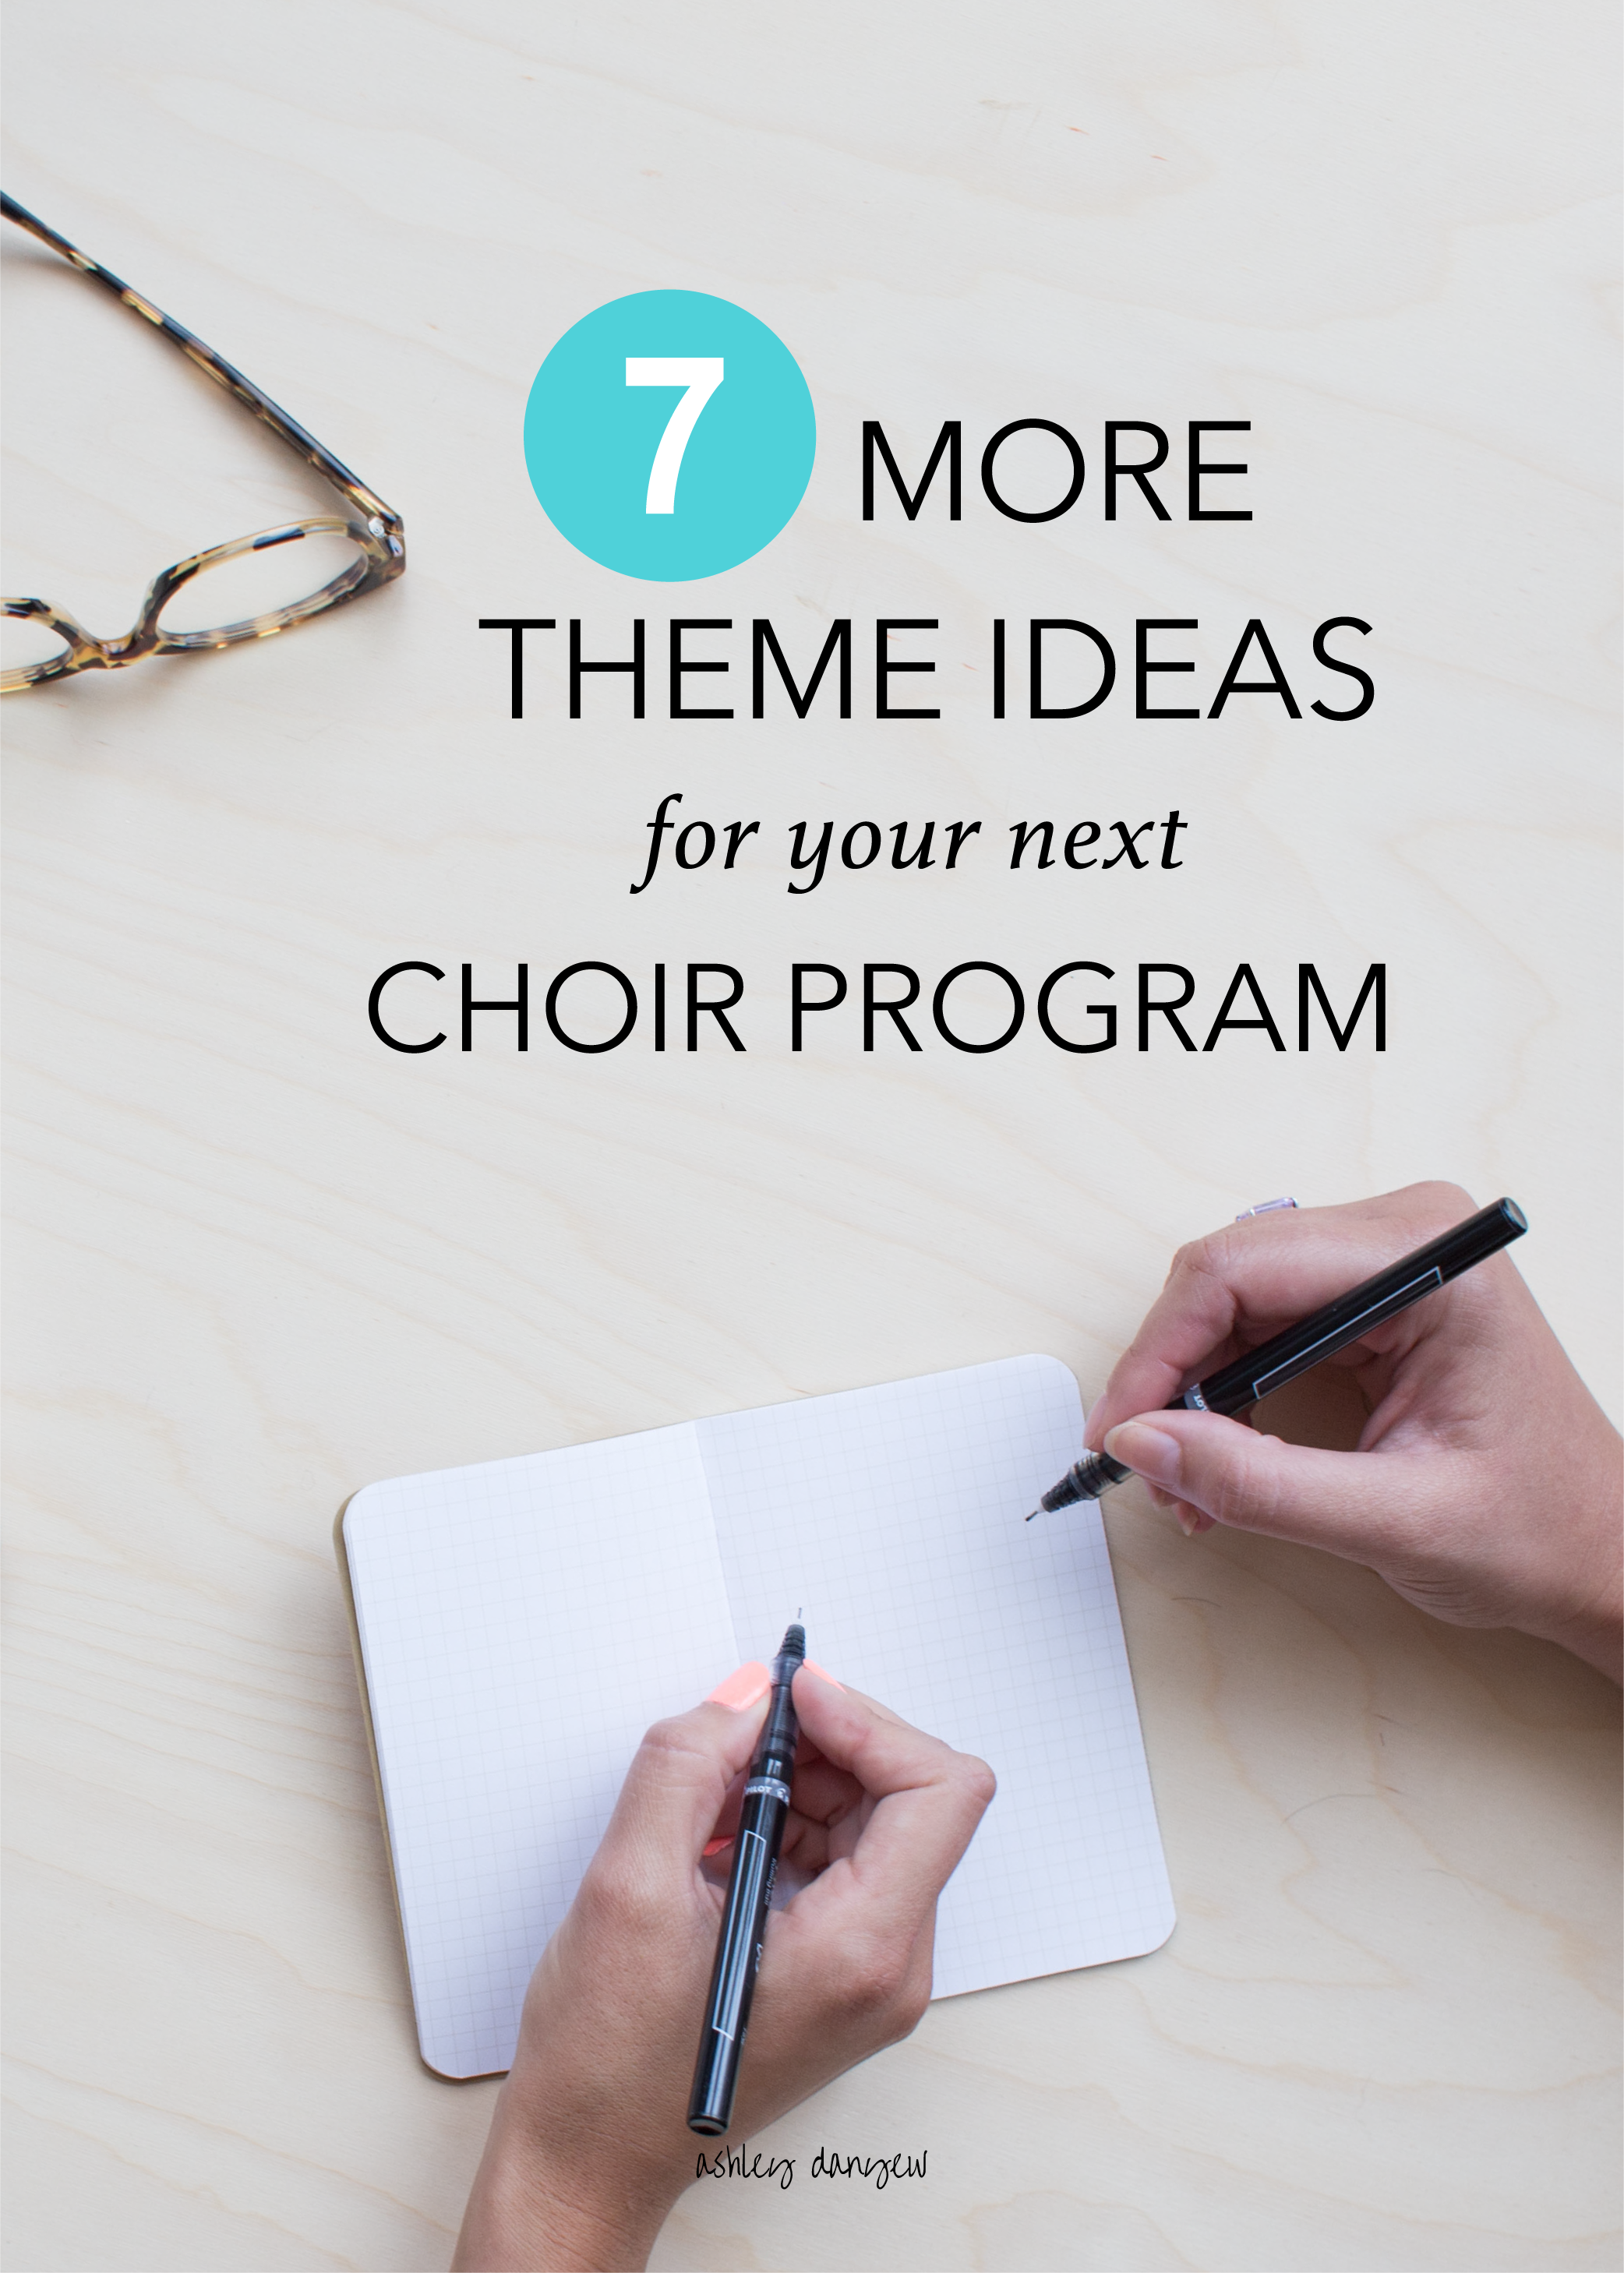 7 More Theme Ideas for Your Next Choir Program